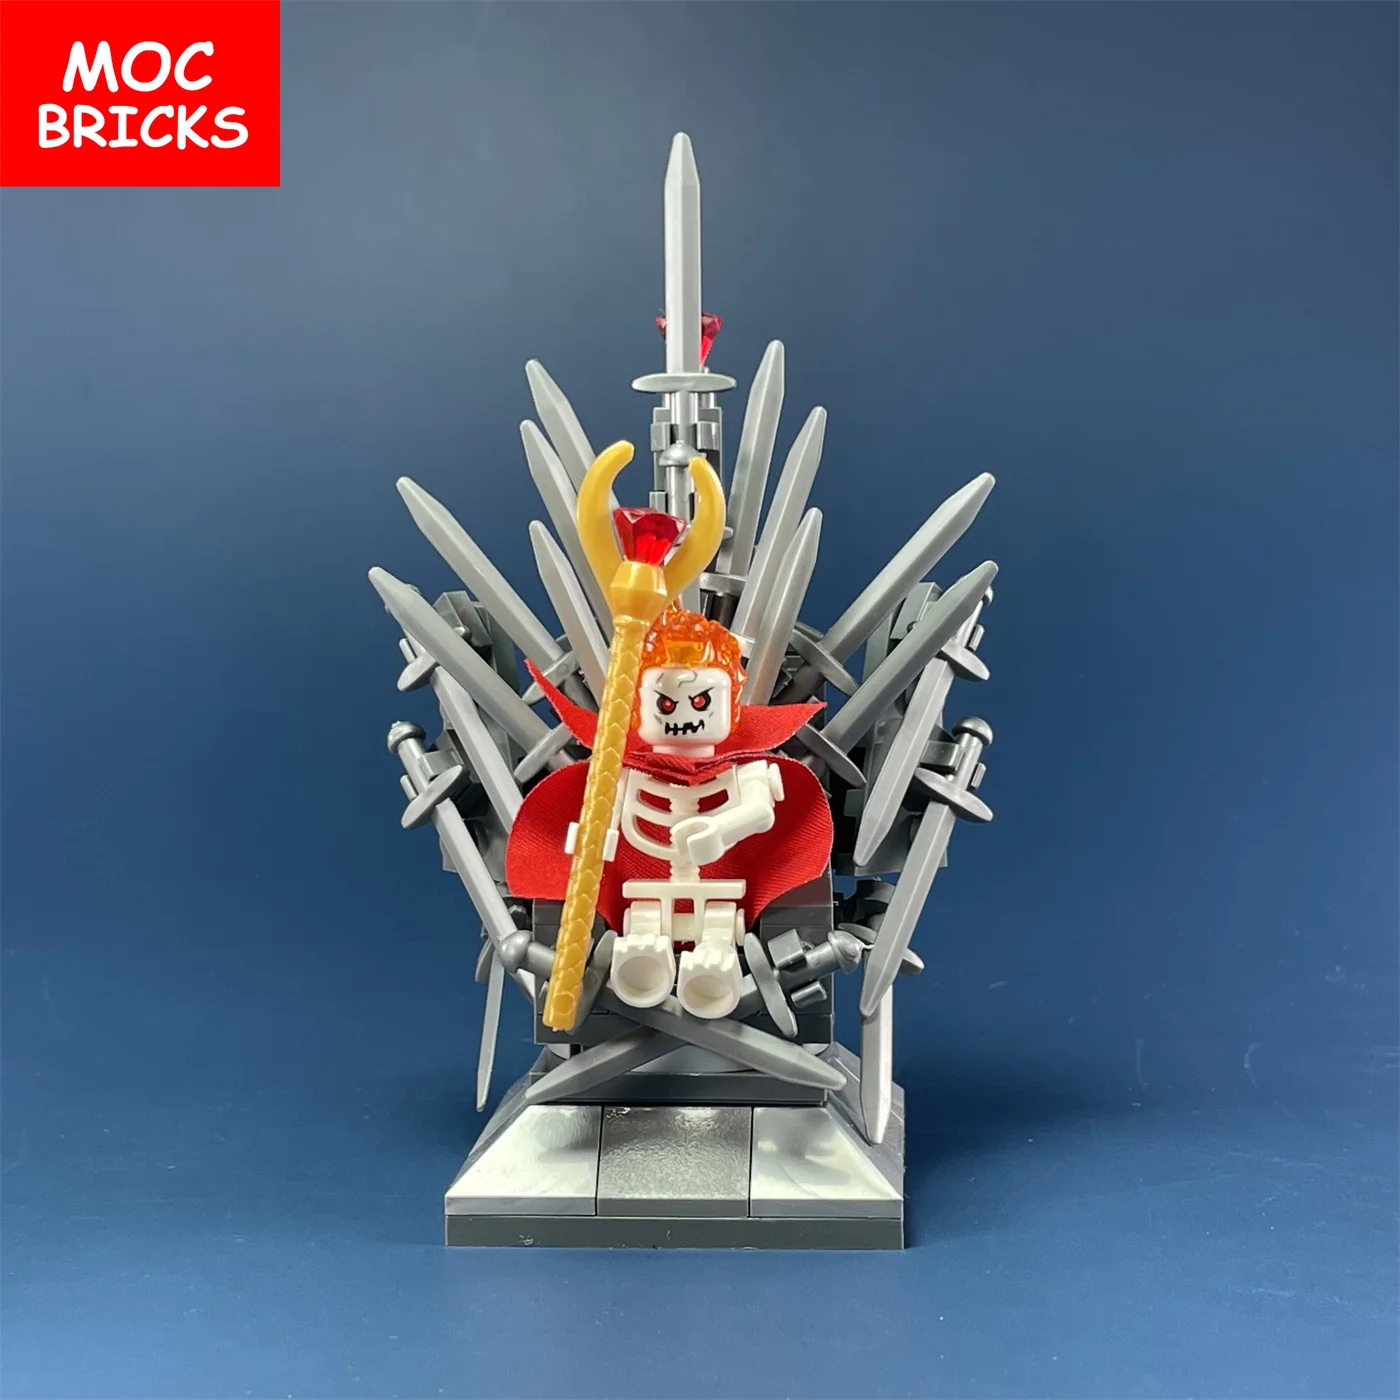 MOC BRICKS The Iron sword Skeleton Messenger King Magic rotating throne Building Blocks Toy Gift for Kids | Игрушки и хобби